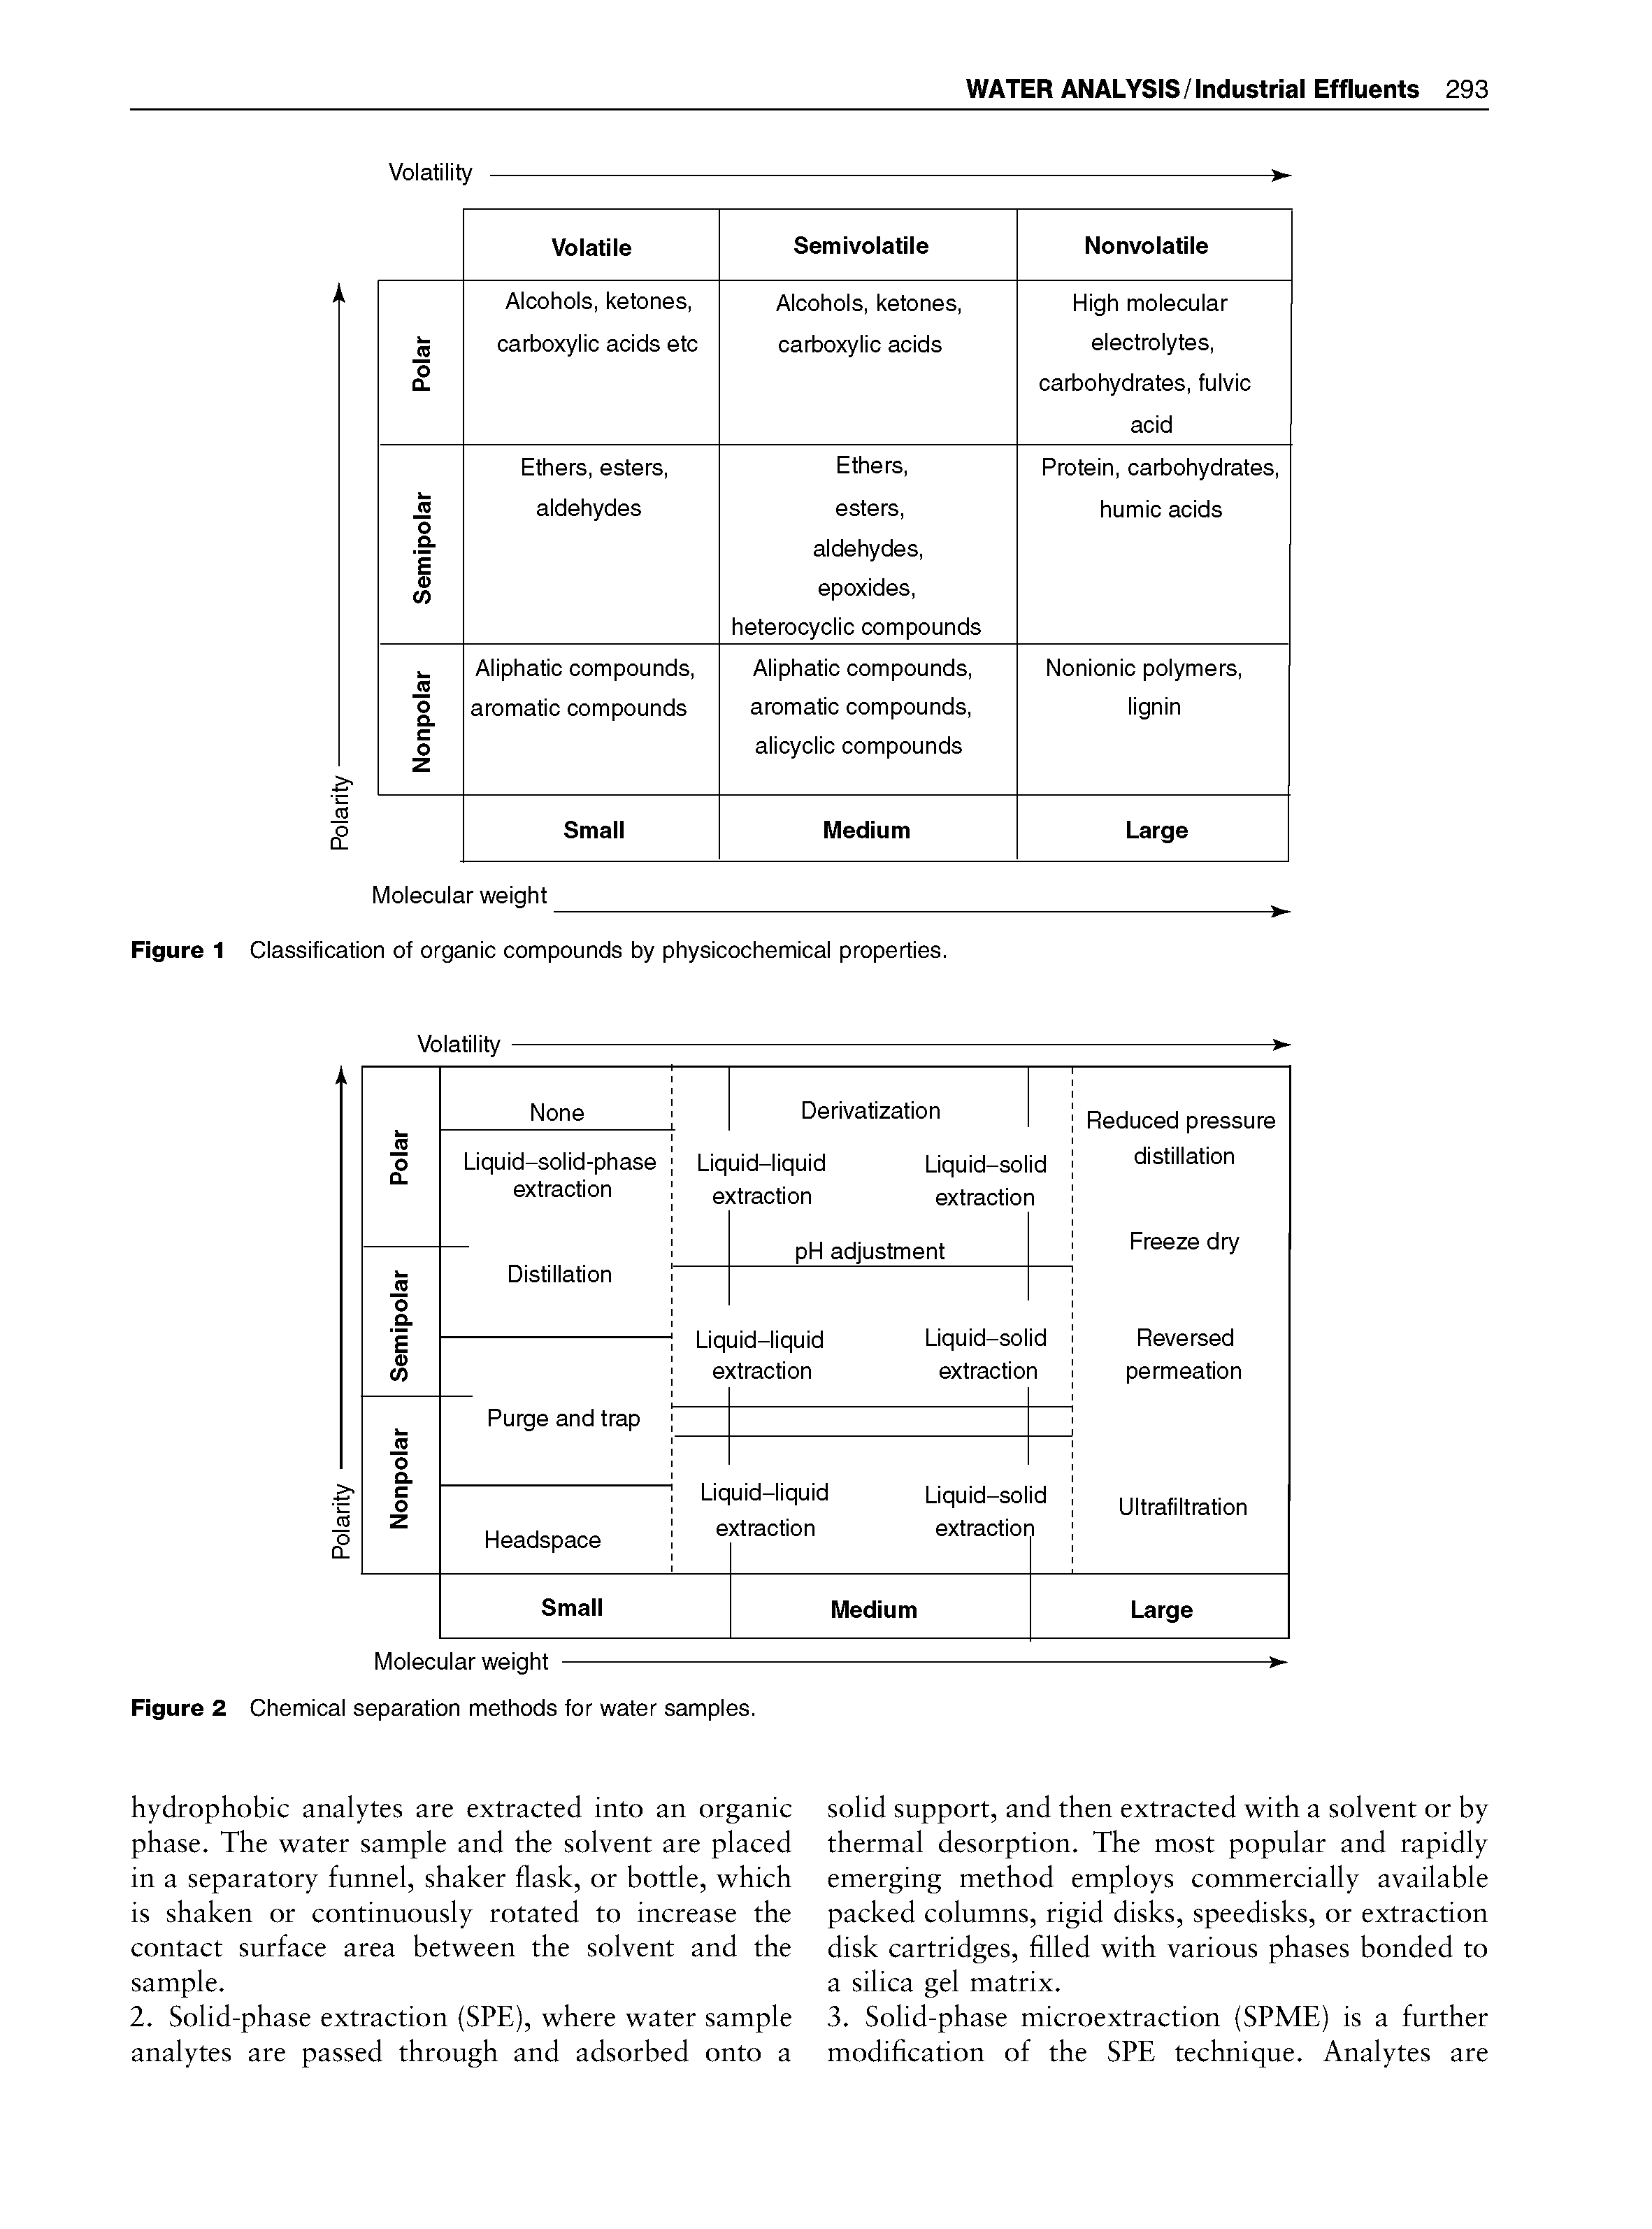 Figure 2 Chemical separation methods for wafer samples.